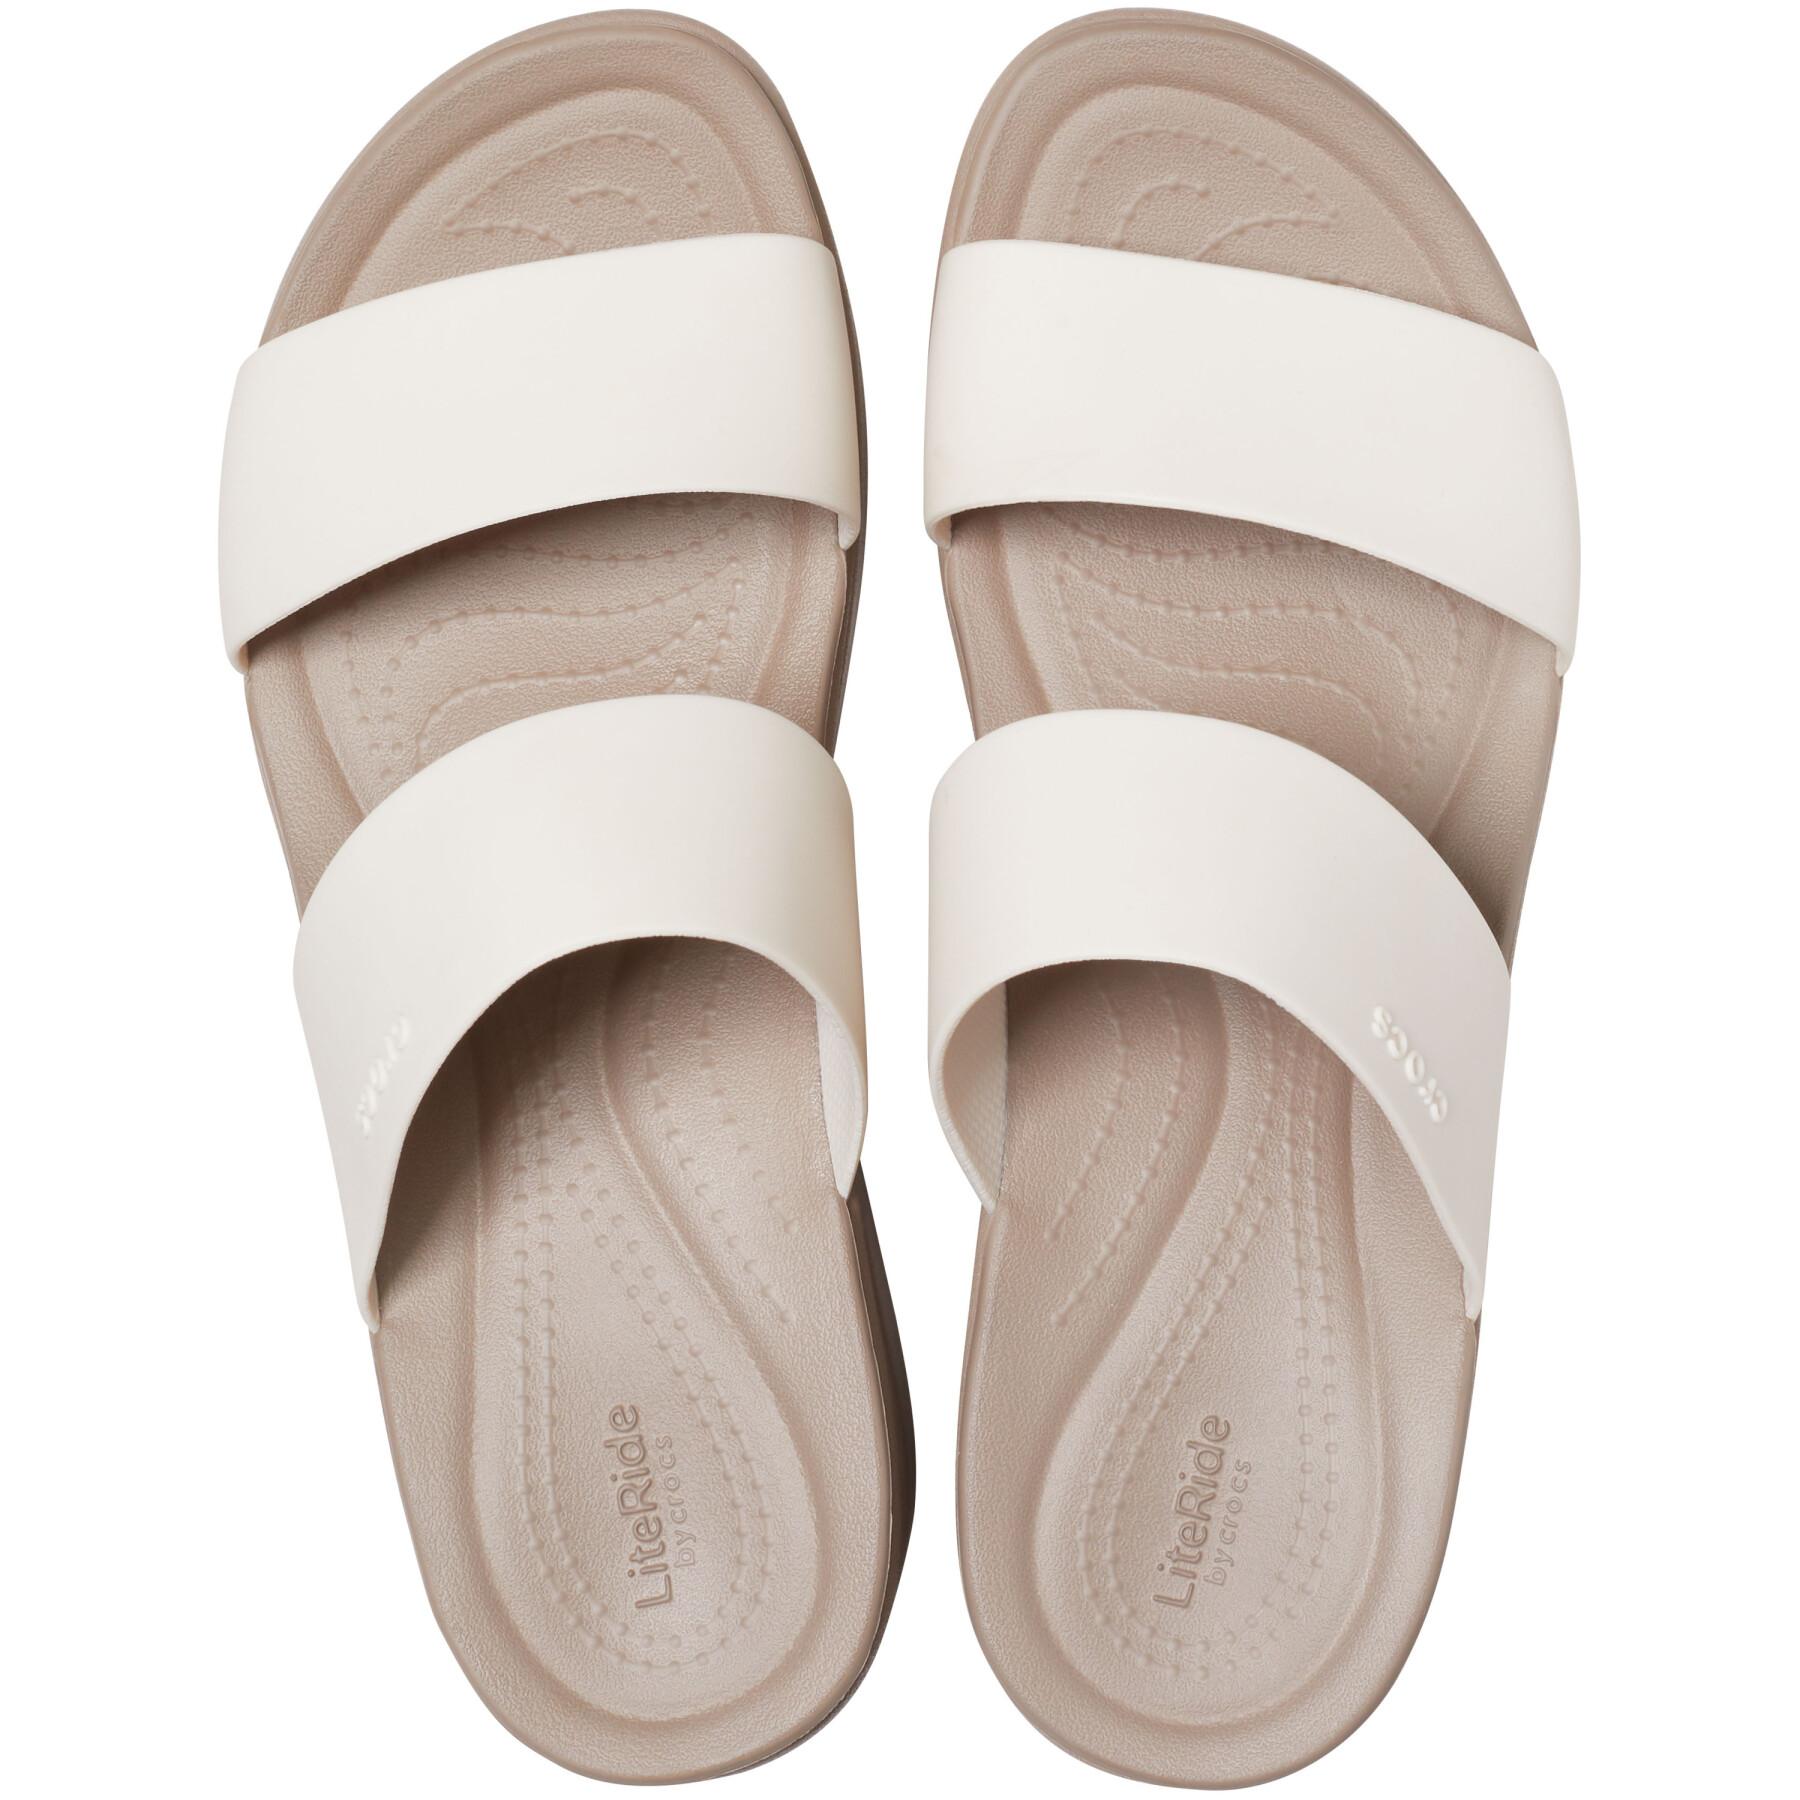 Women's sandals Crocs brooklyn mid wedge